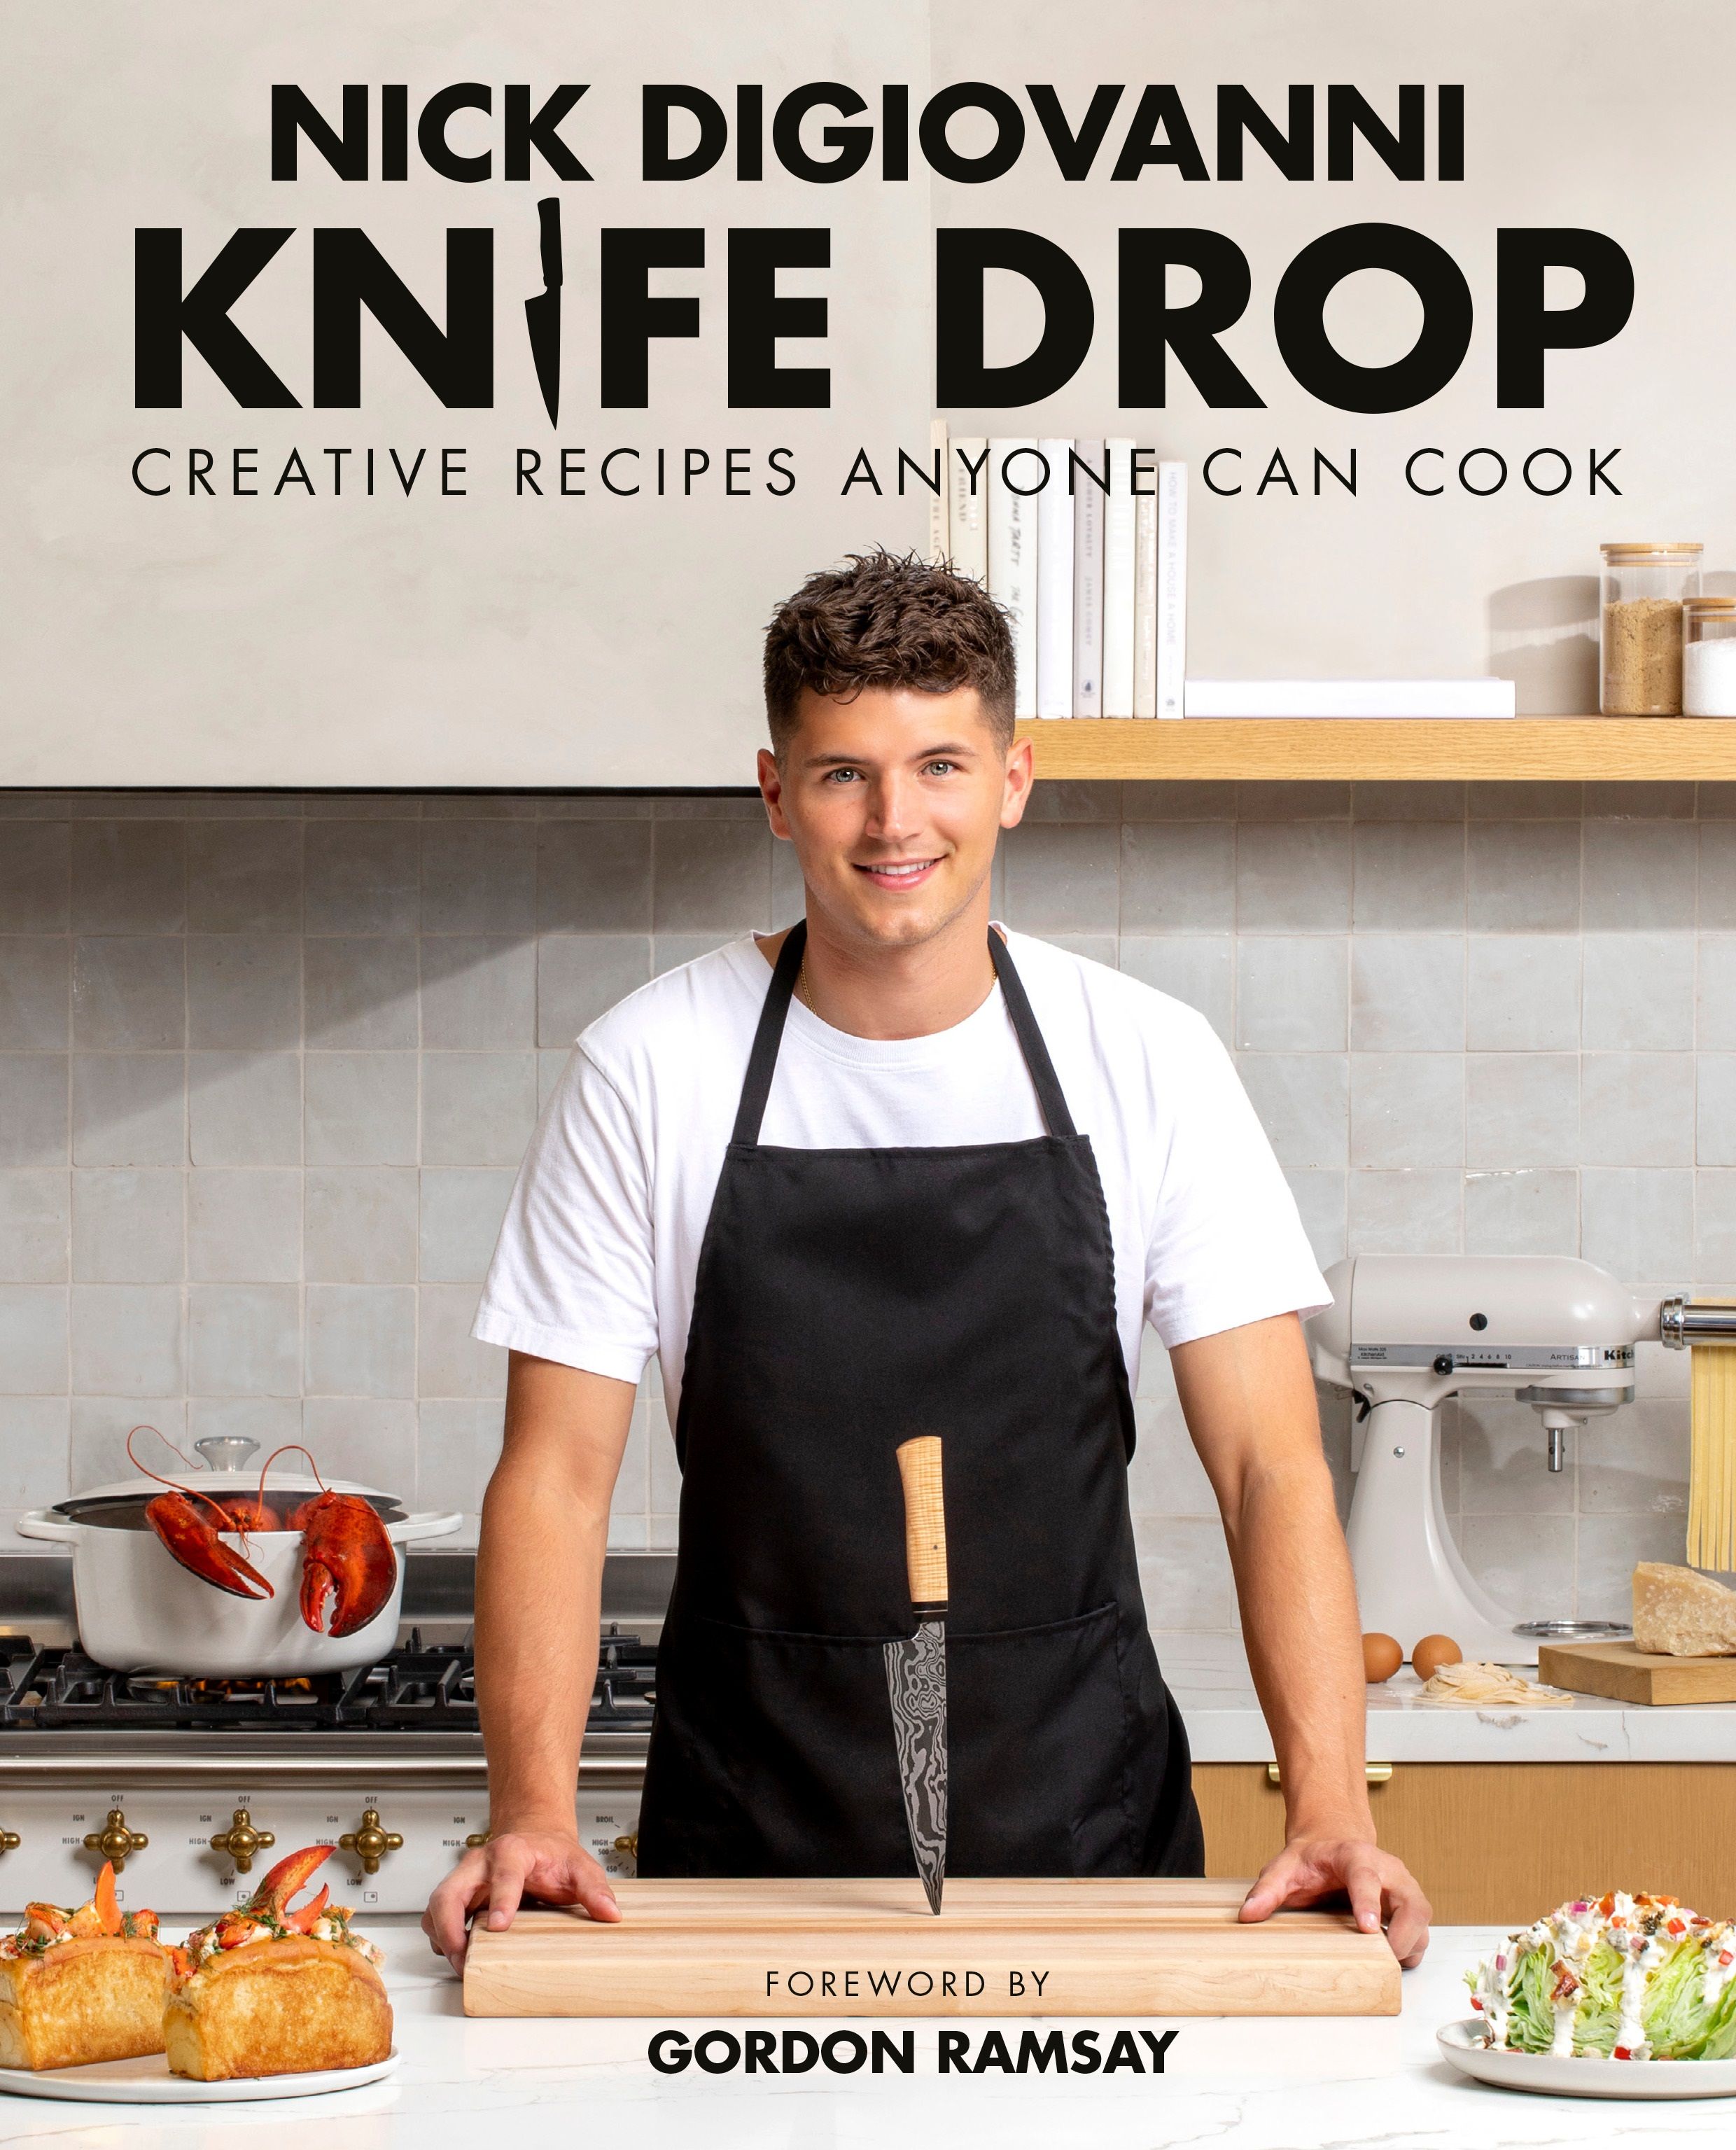 Social Media Star Nick DiGiovanni Releases First Cookbook 'Knife Drop